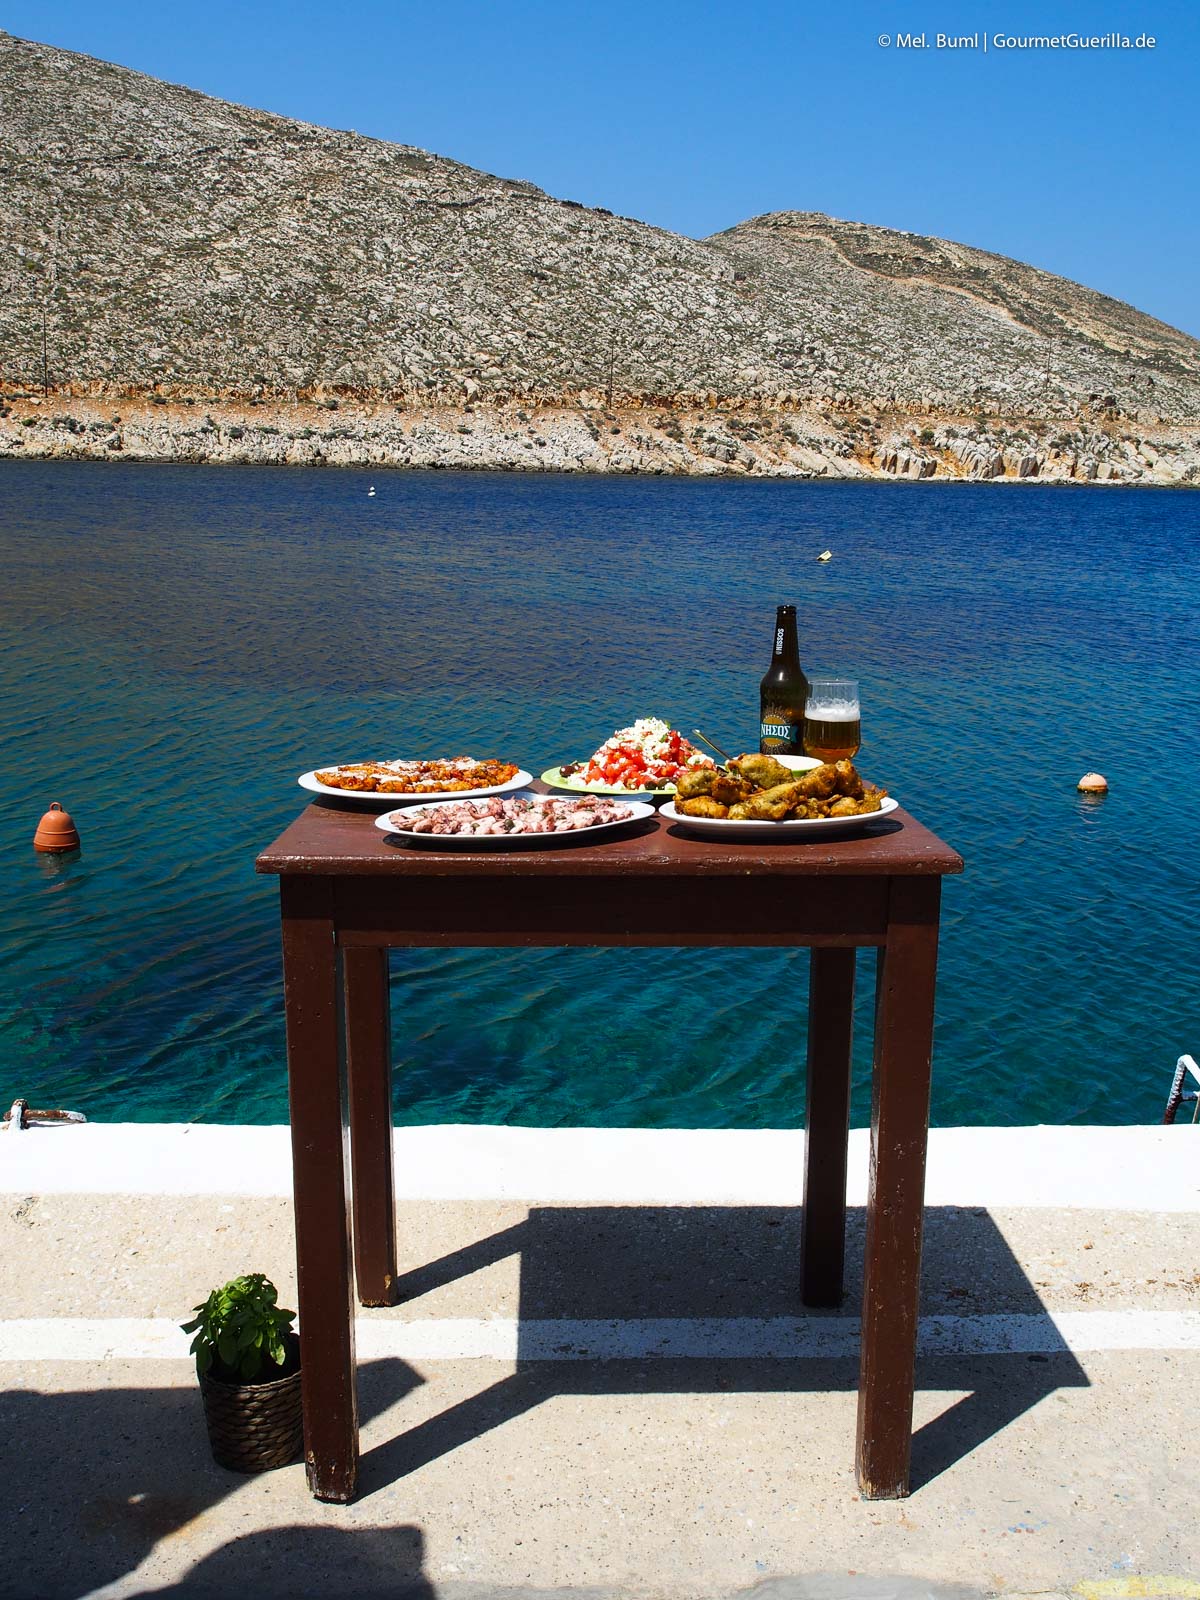  Food by the Sea Travel Report Tinos Foodpath Greek Island of Cyclades Greece | GourmetGuerilla.com 